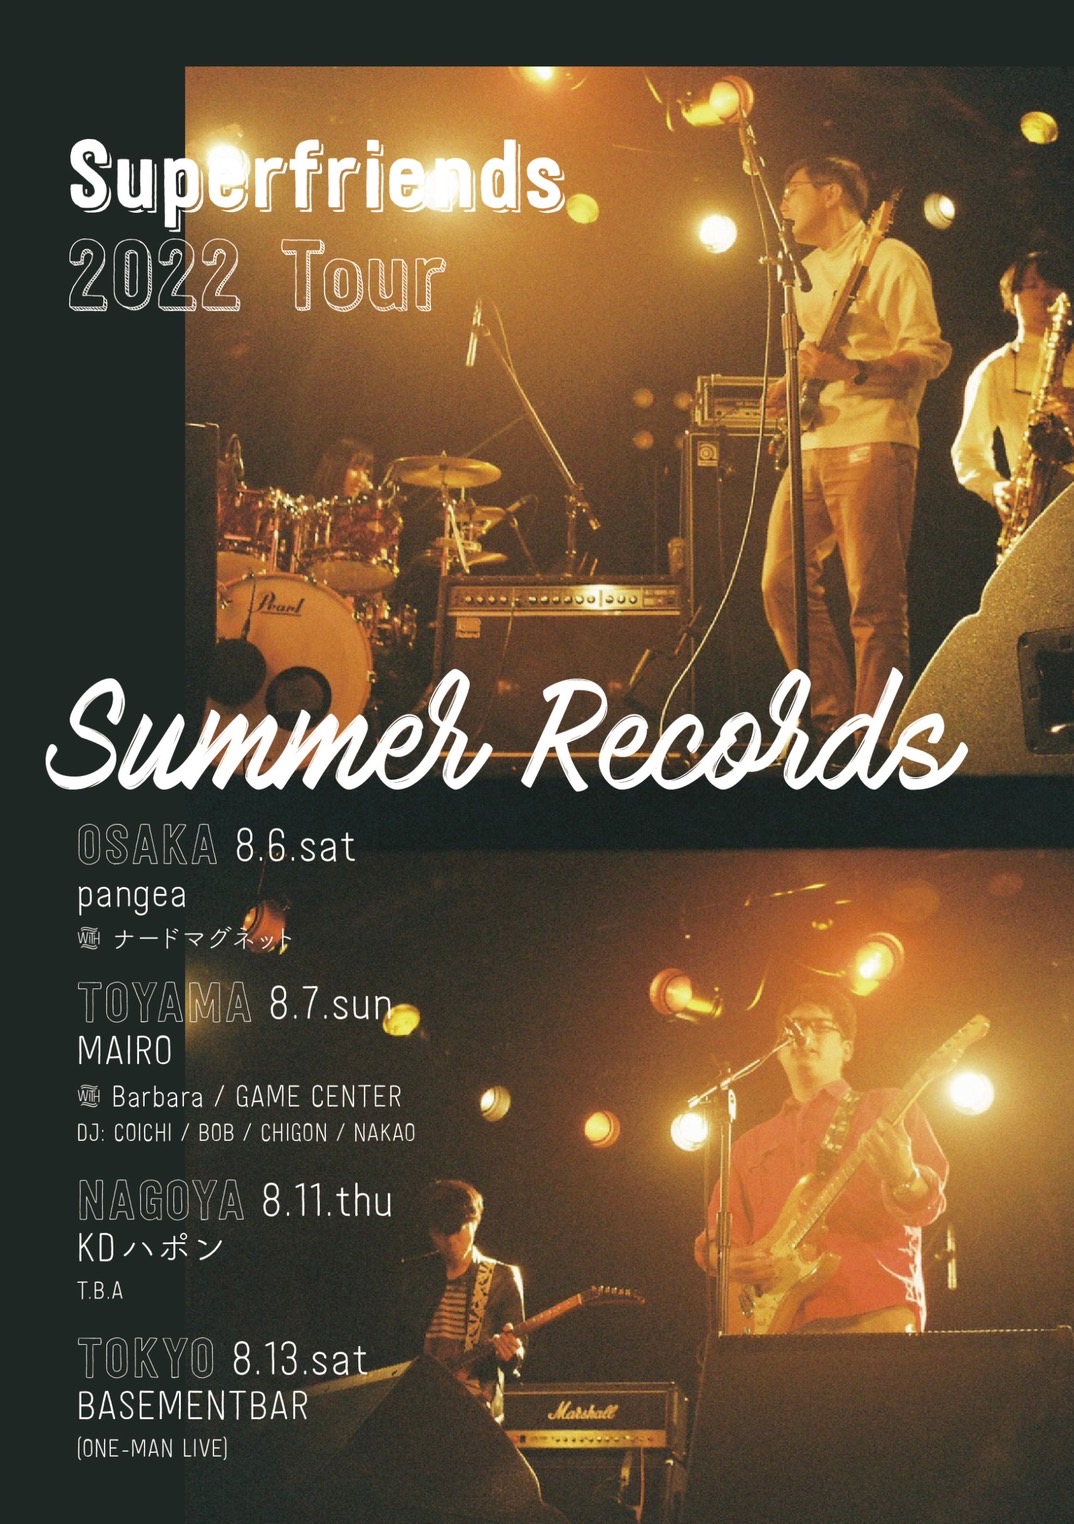 Superfriends 2022 Tour 「Summer Records」